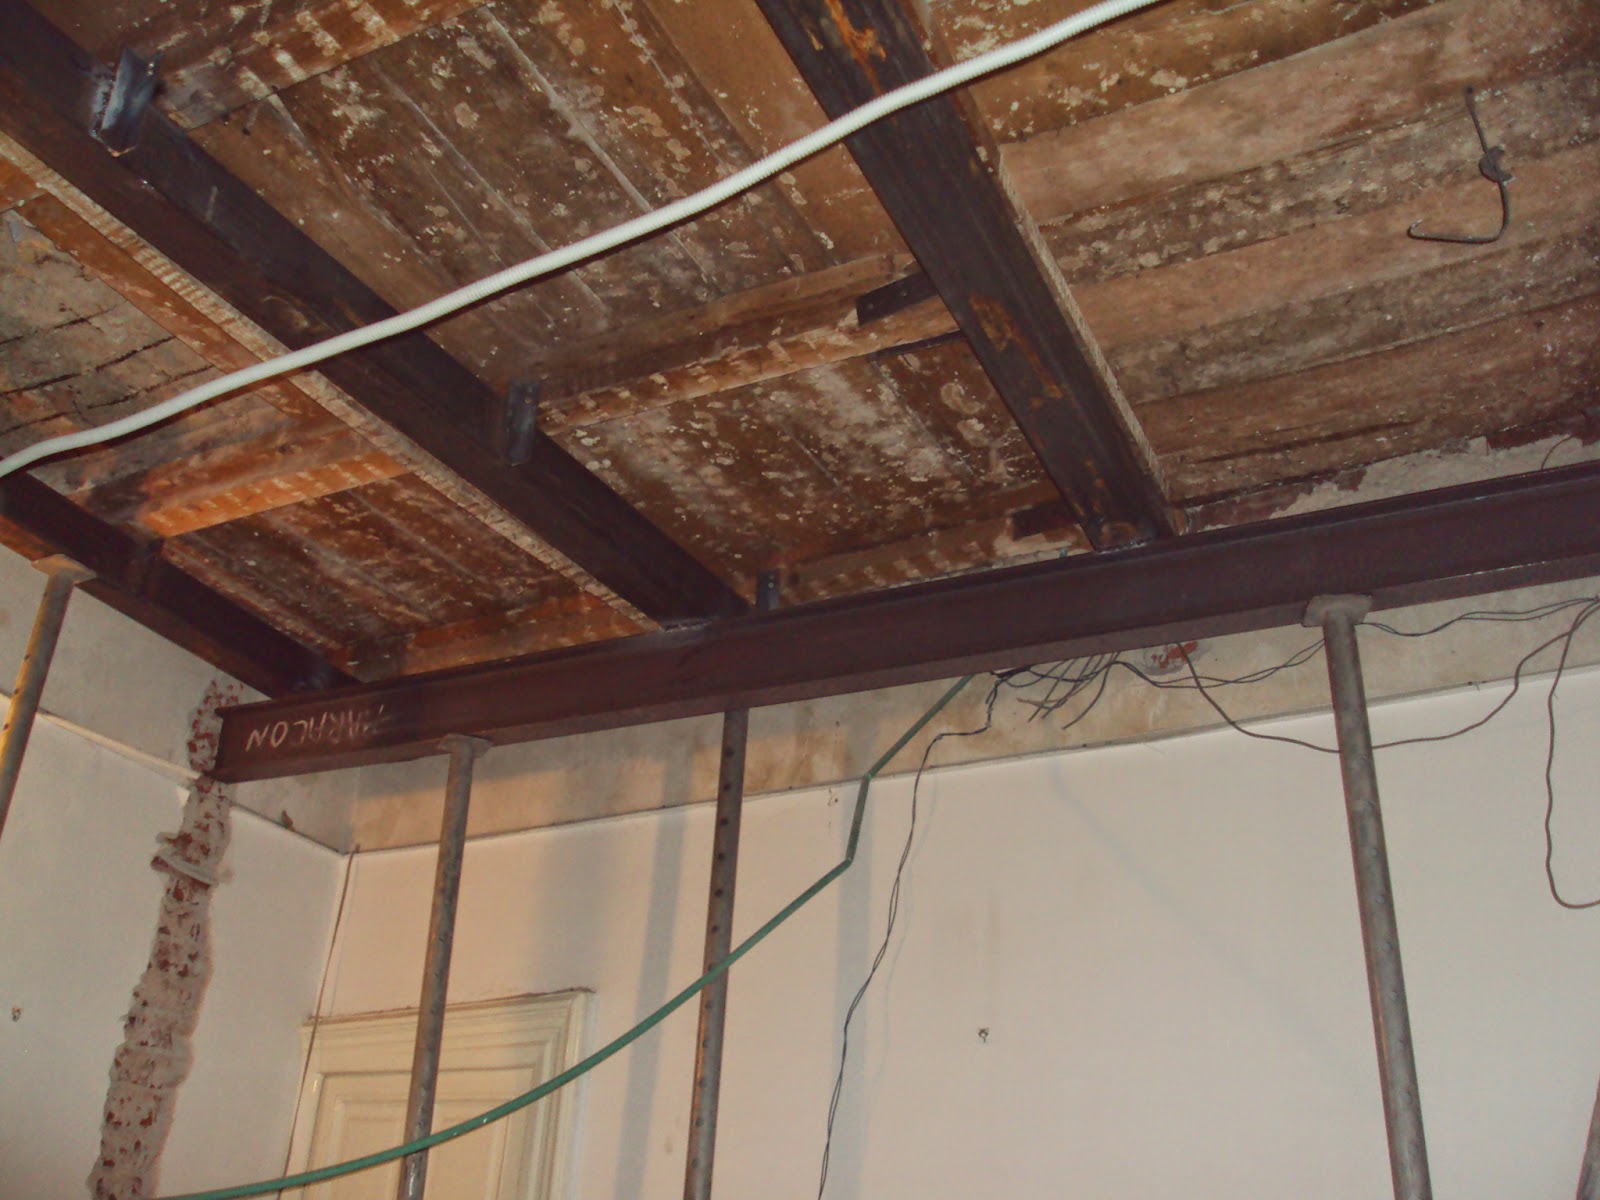 Arta creatie meserie prafuita: Consolidare plafon structura metalica si acoperire cu tavan fals